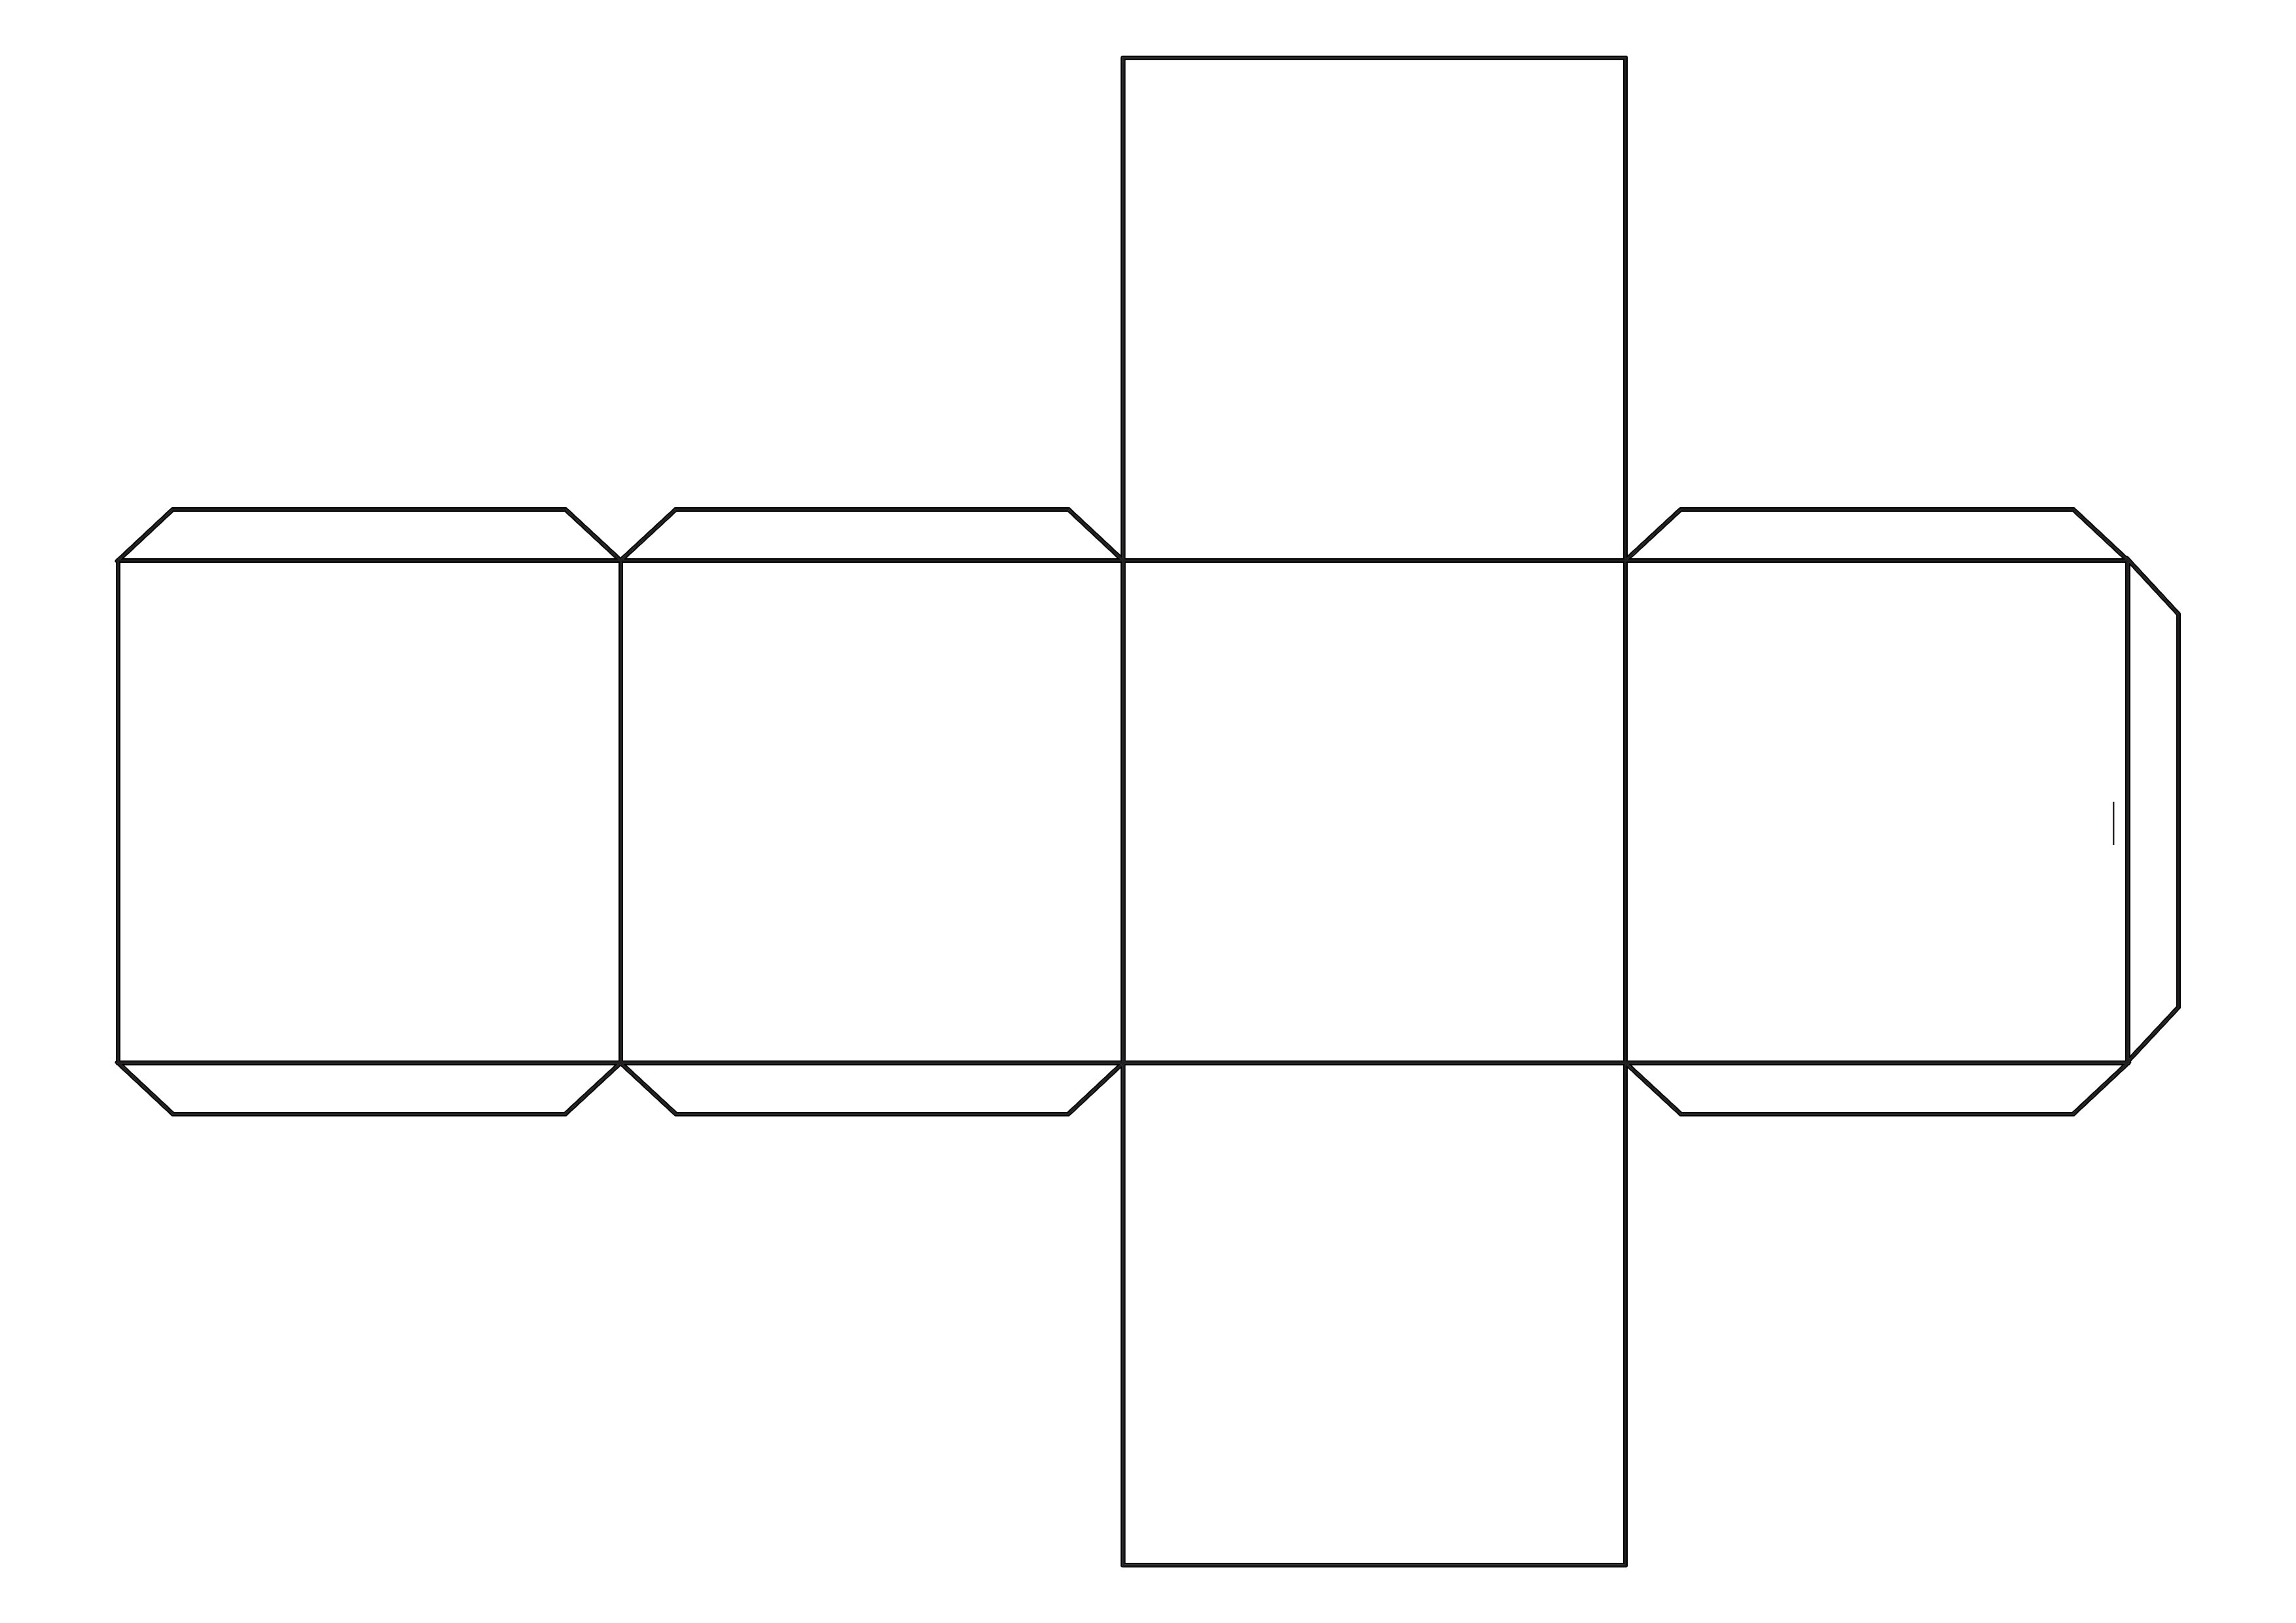 Объемная форма куба. Развертка Куба 4х4. Развертка Куба развертка Куба. Развёртка прямоугольного параллелепипеда на листе а4. Развёртка Куба 6 на 6.